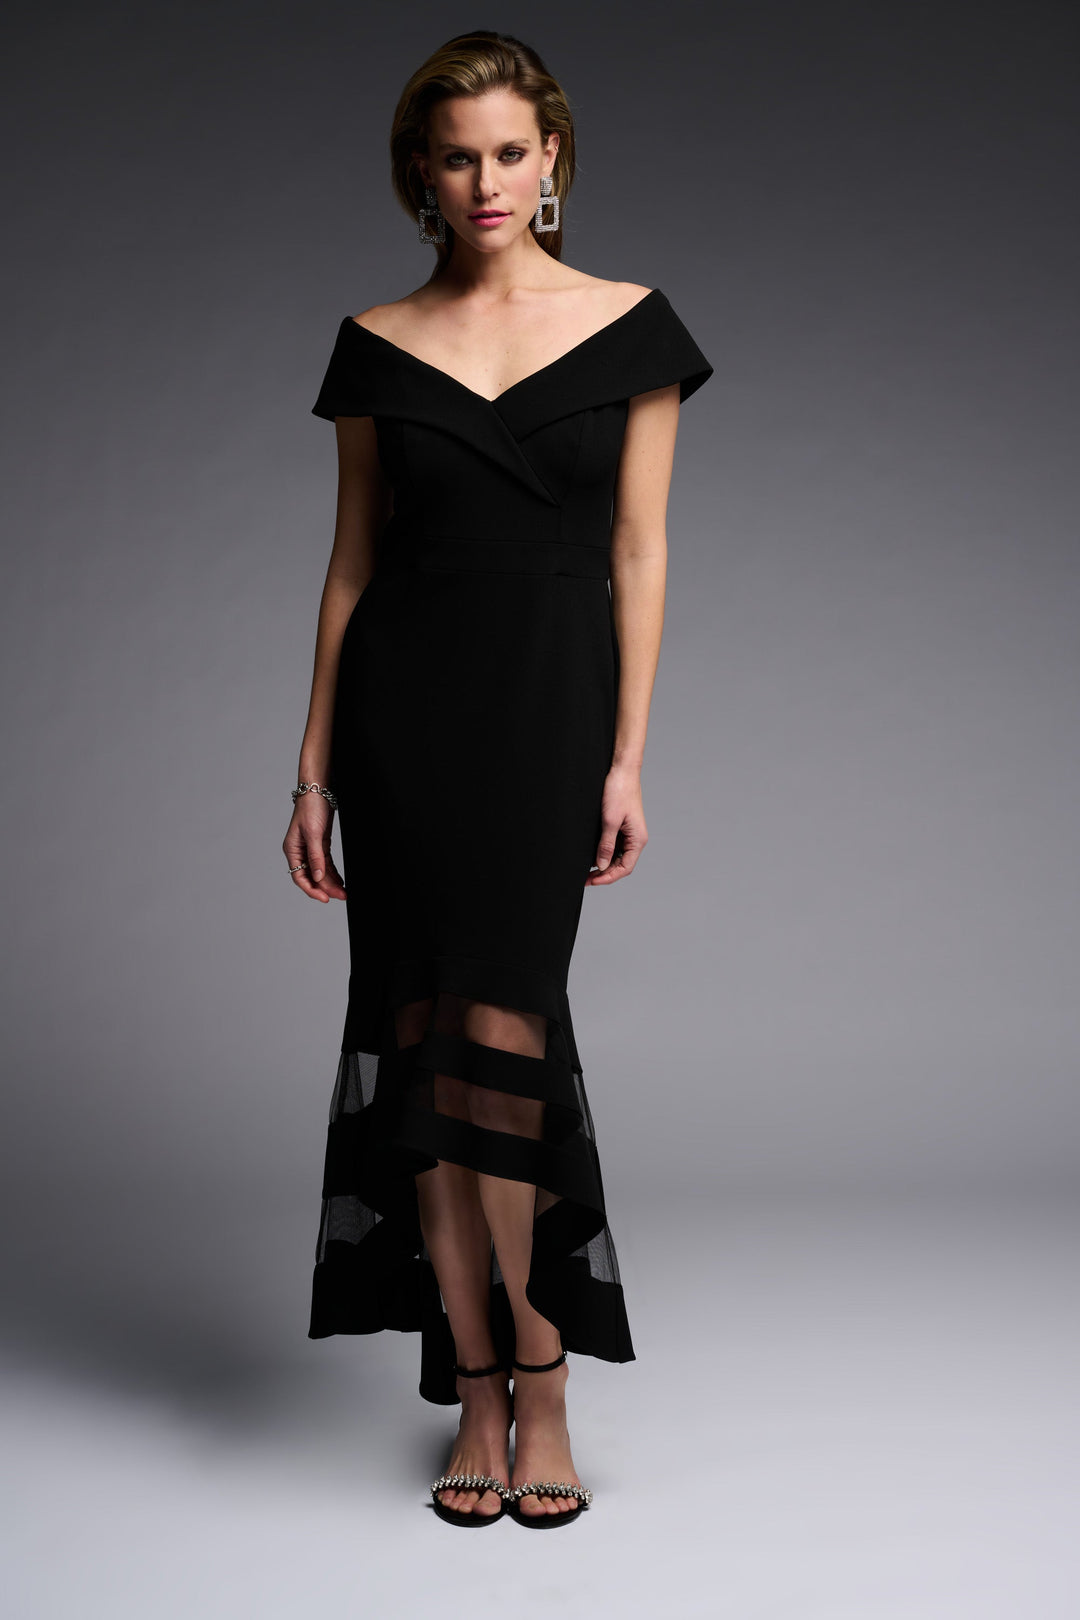 Joseph Ribkoff Dress Style 223743